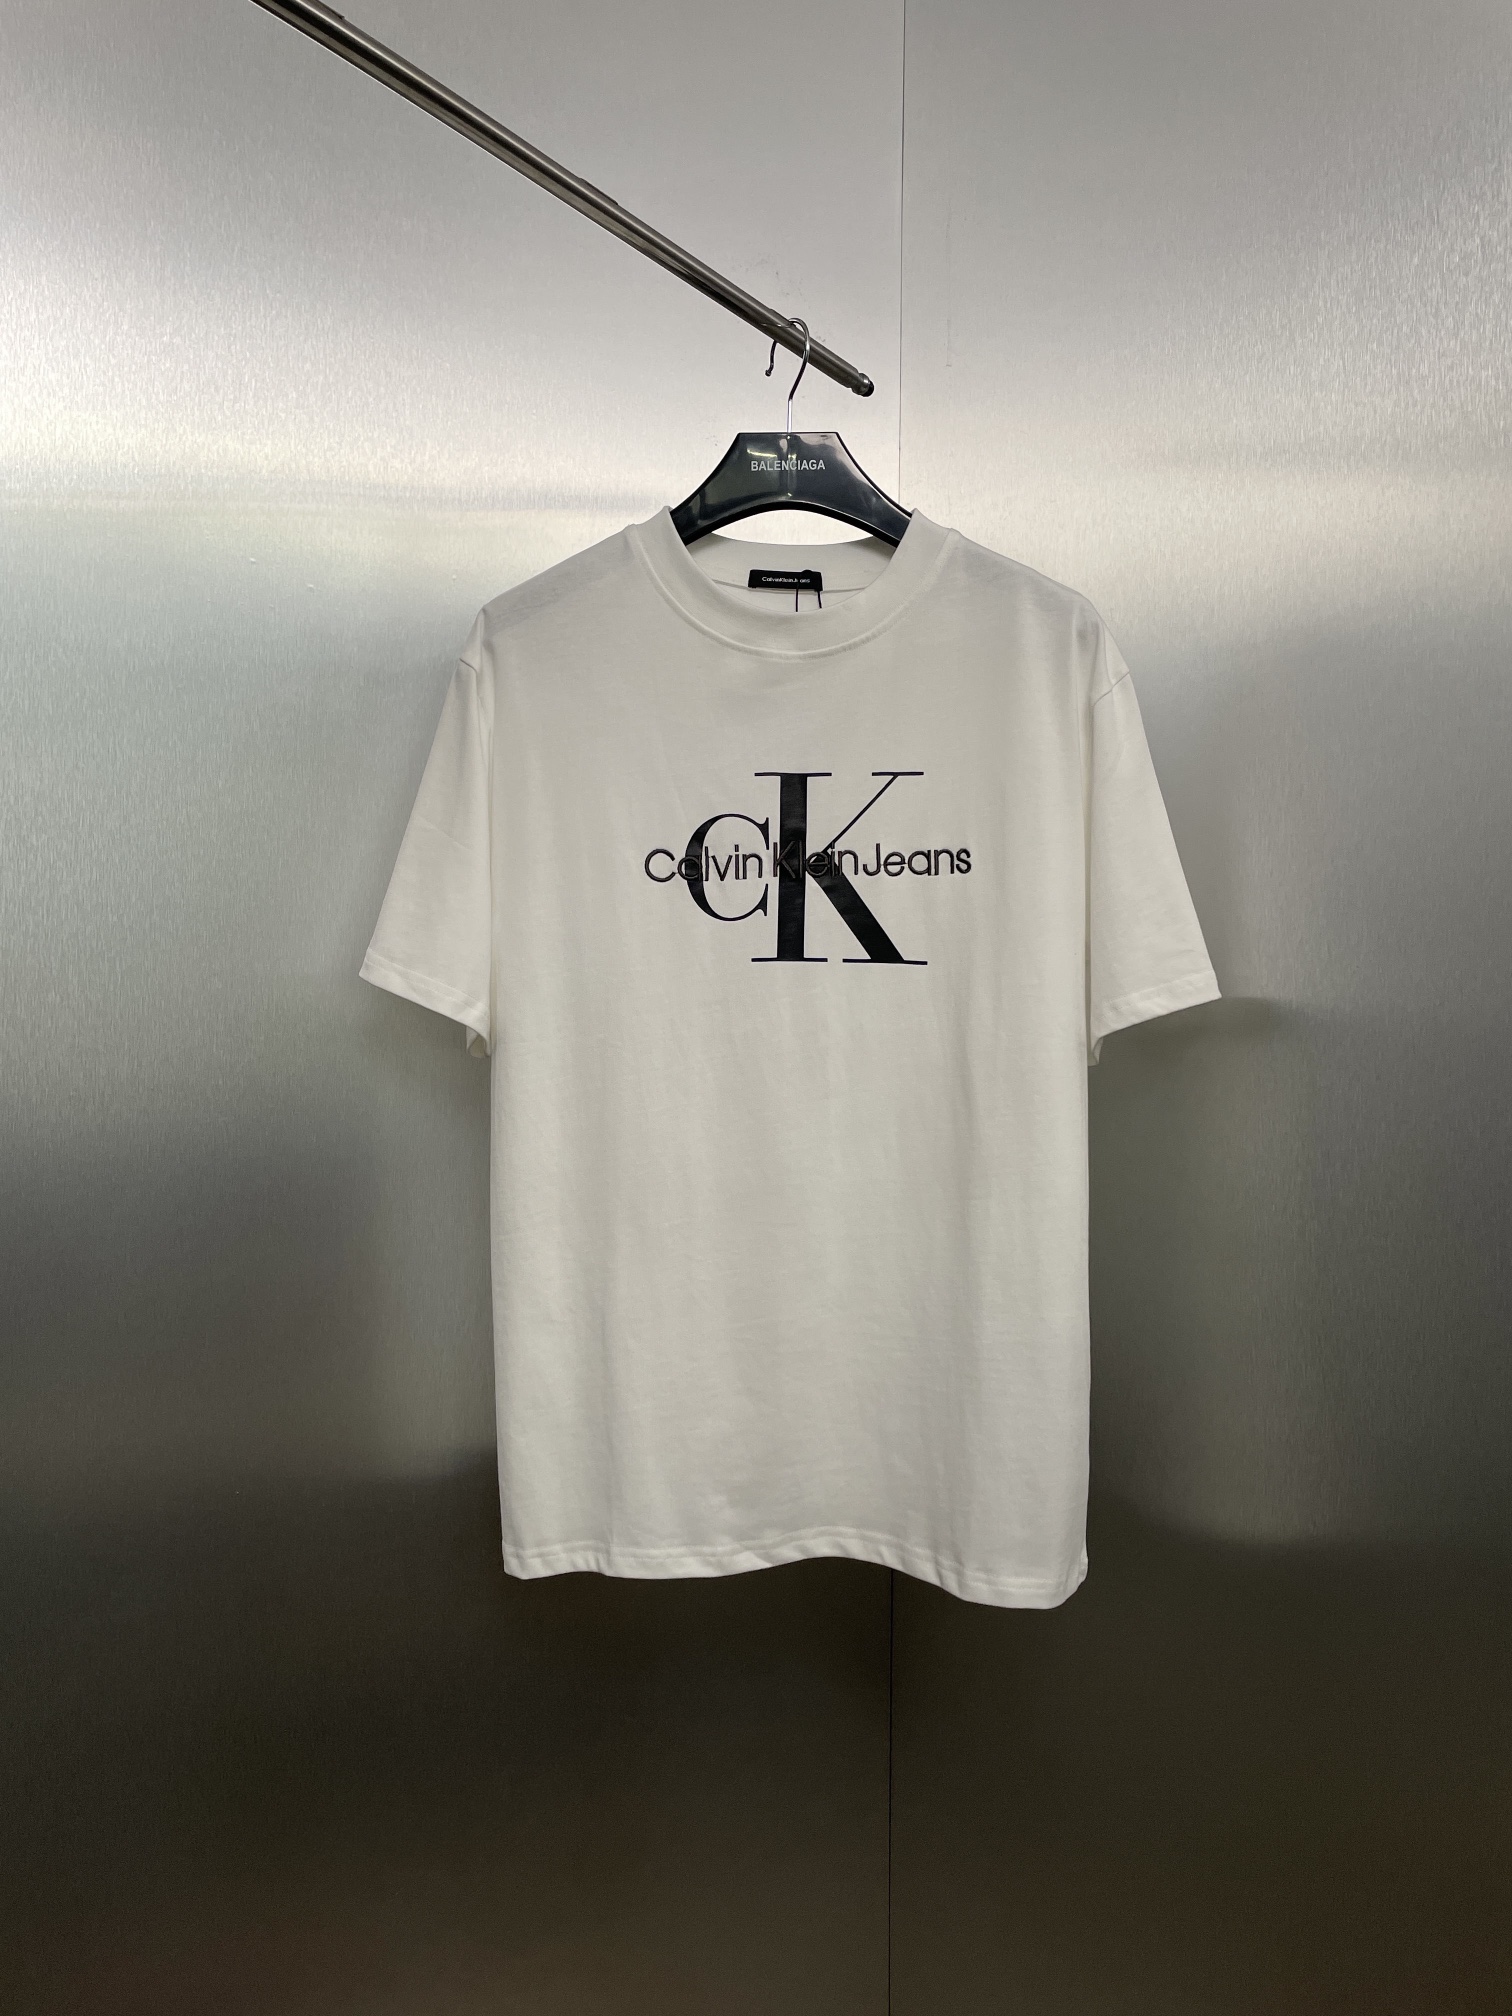 Calvin Klein Clothing T-Shirt Black White Embroidery Unisex Cotton Mercerized Silk Fashion Short Sleeve